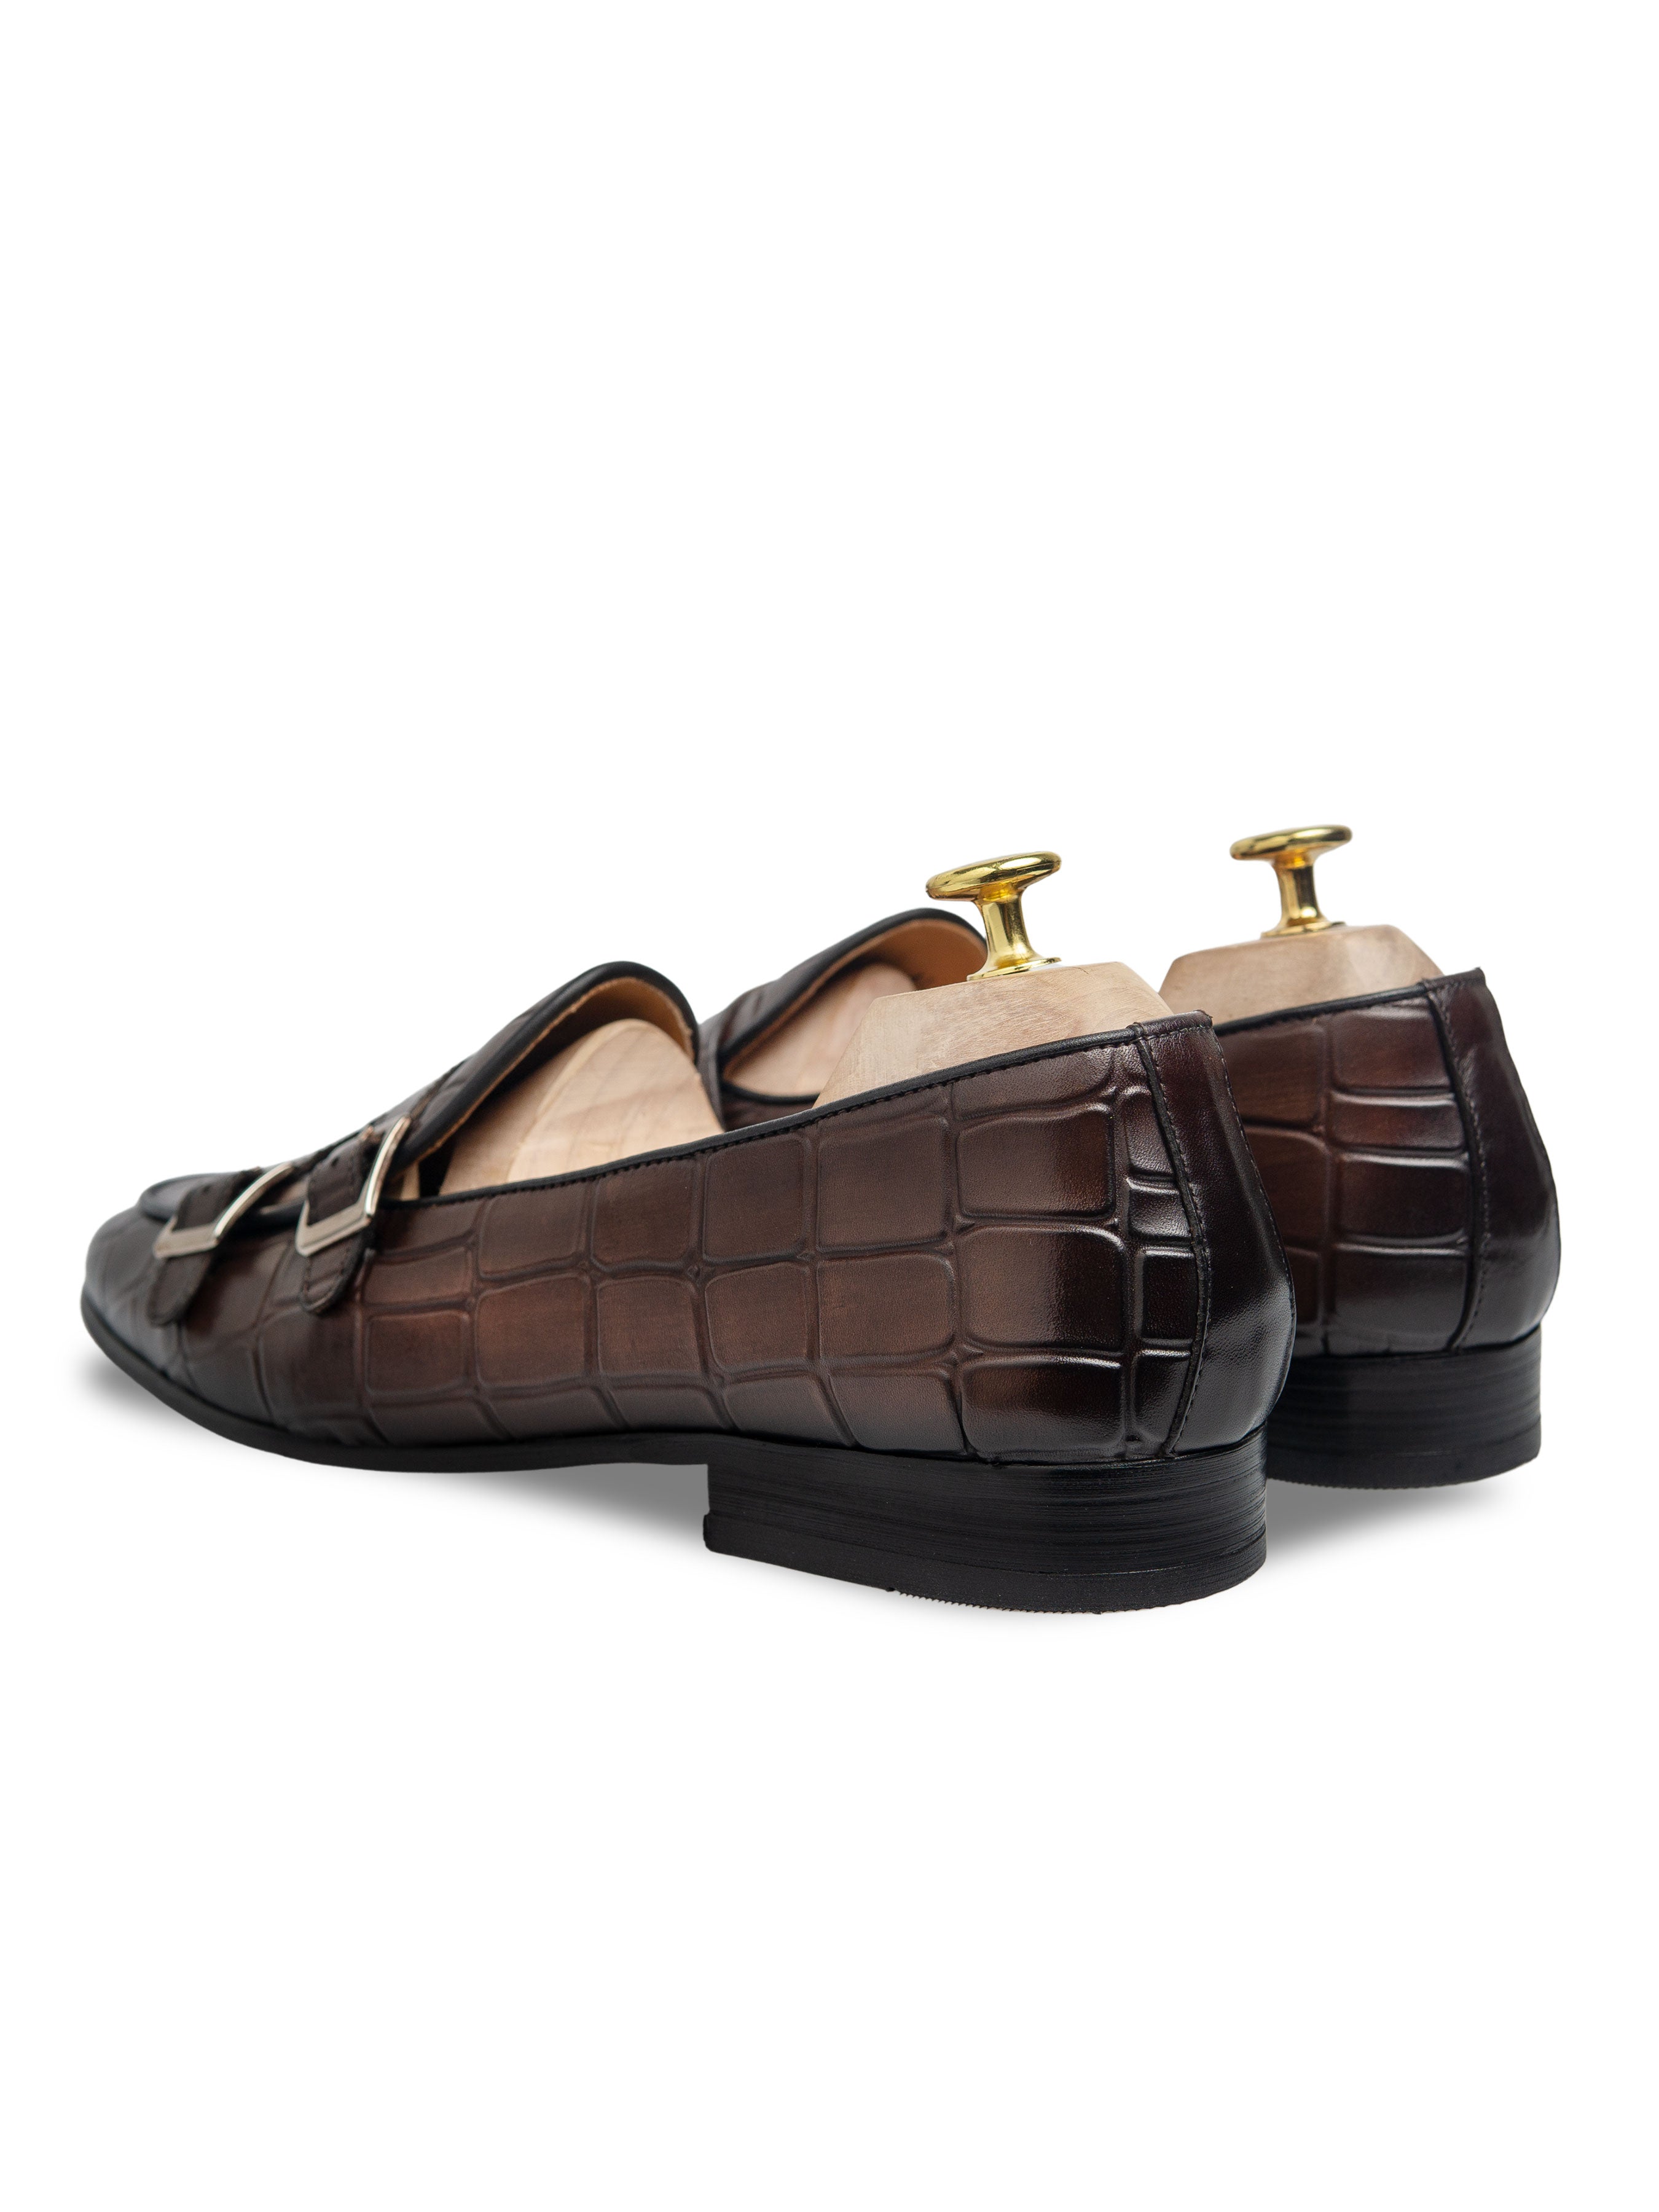 Belgian Loafer - Dark Brown Croco Double Monk Strap - Zeve Shoes